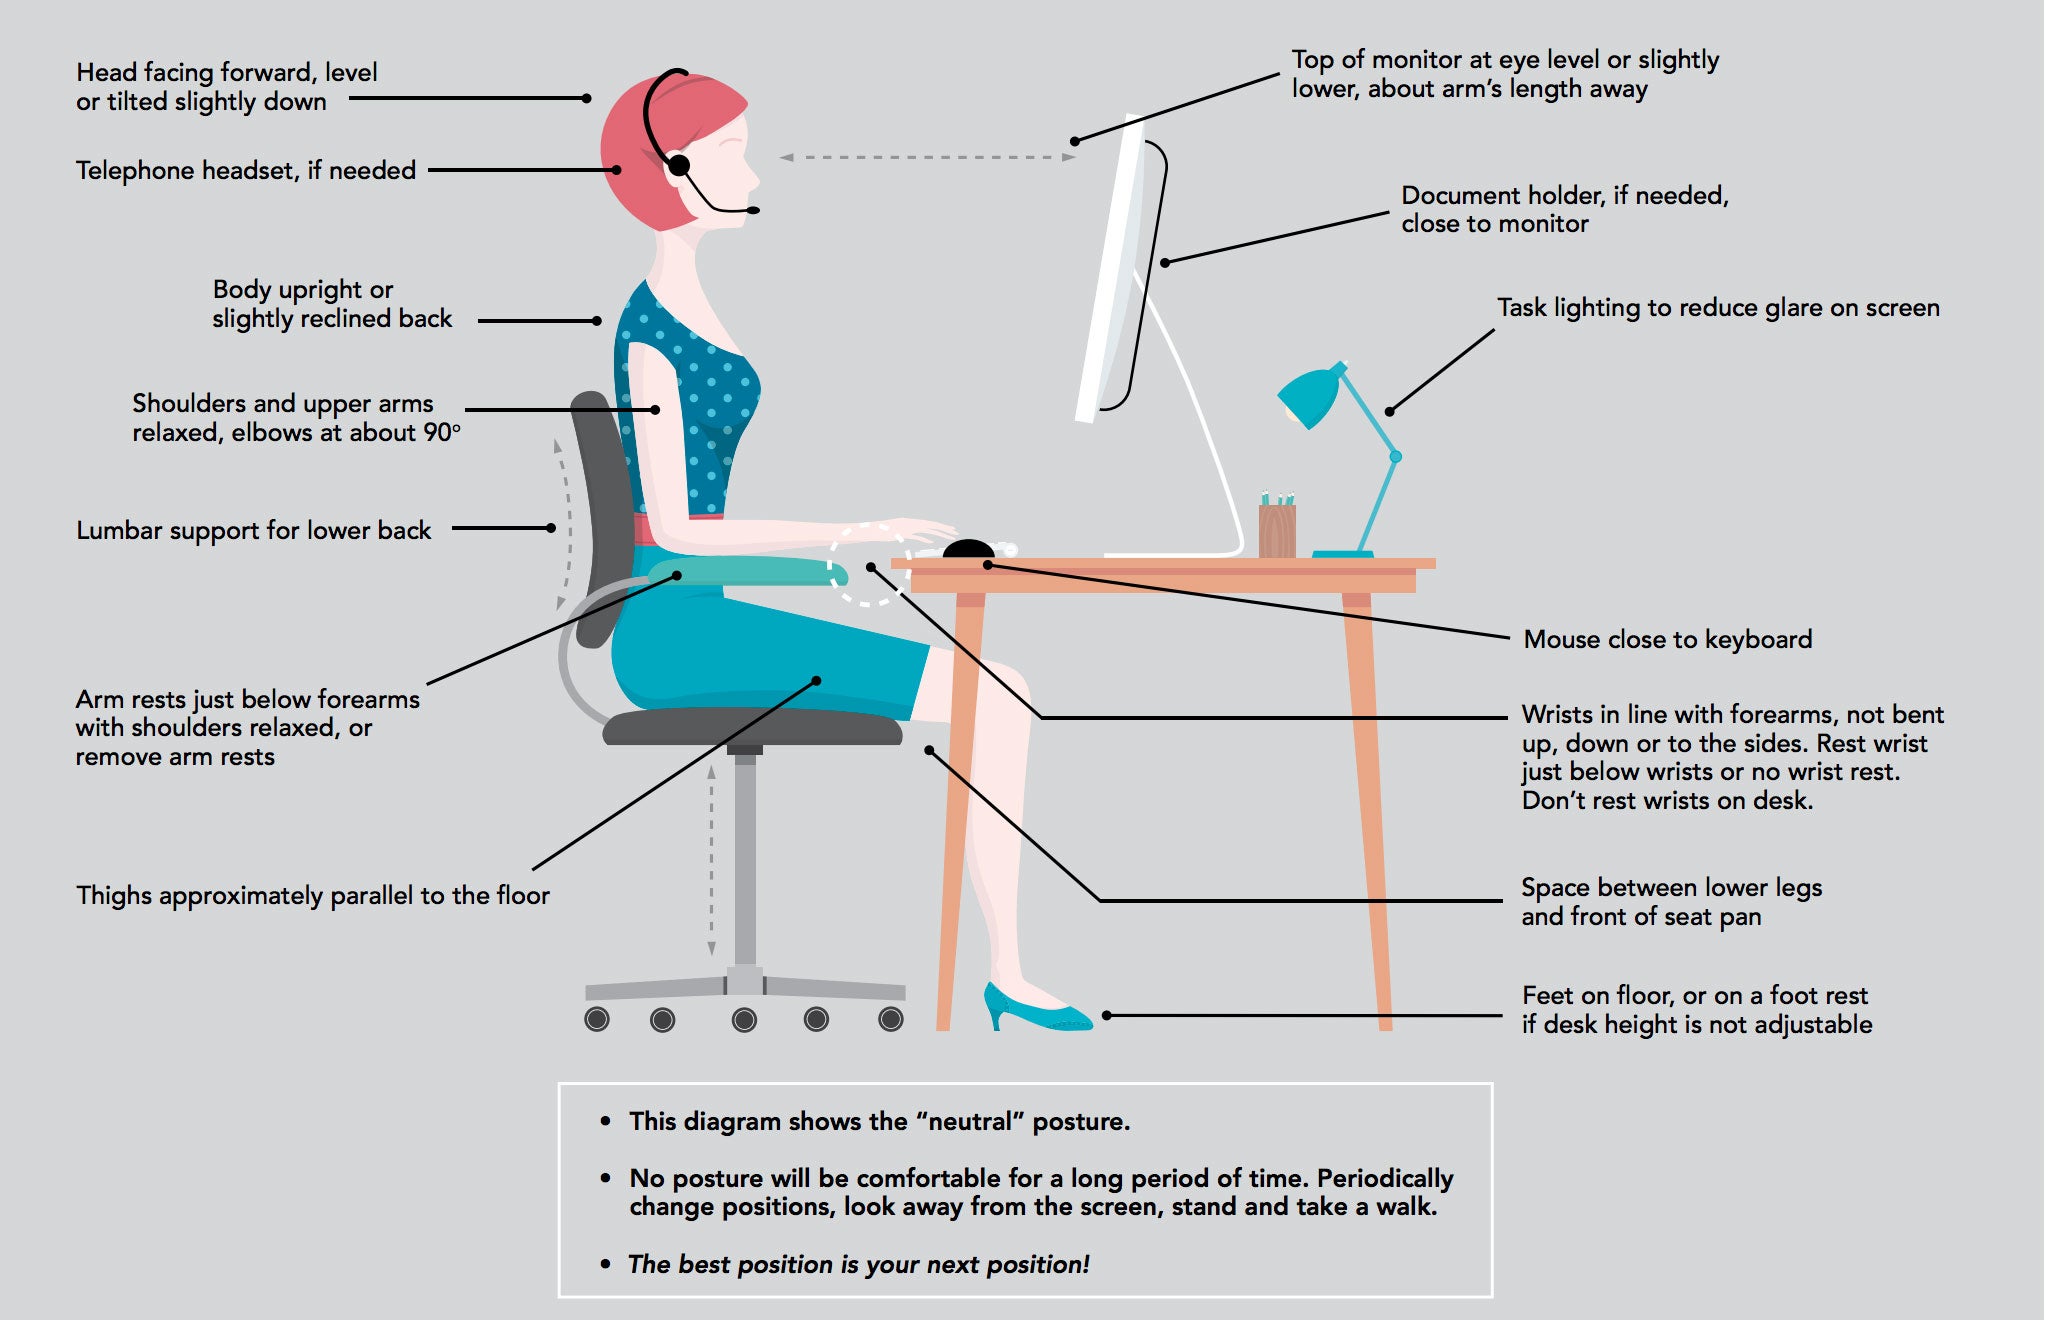 Illustration with workstation ergonomics guidelines